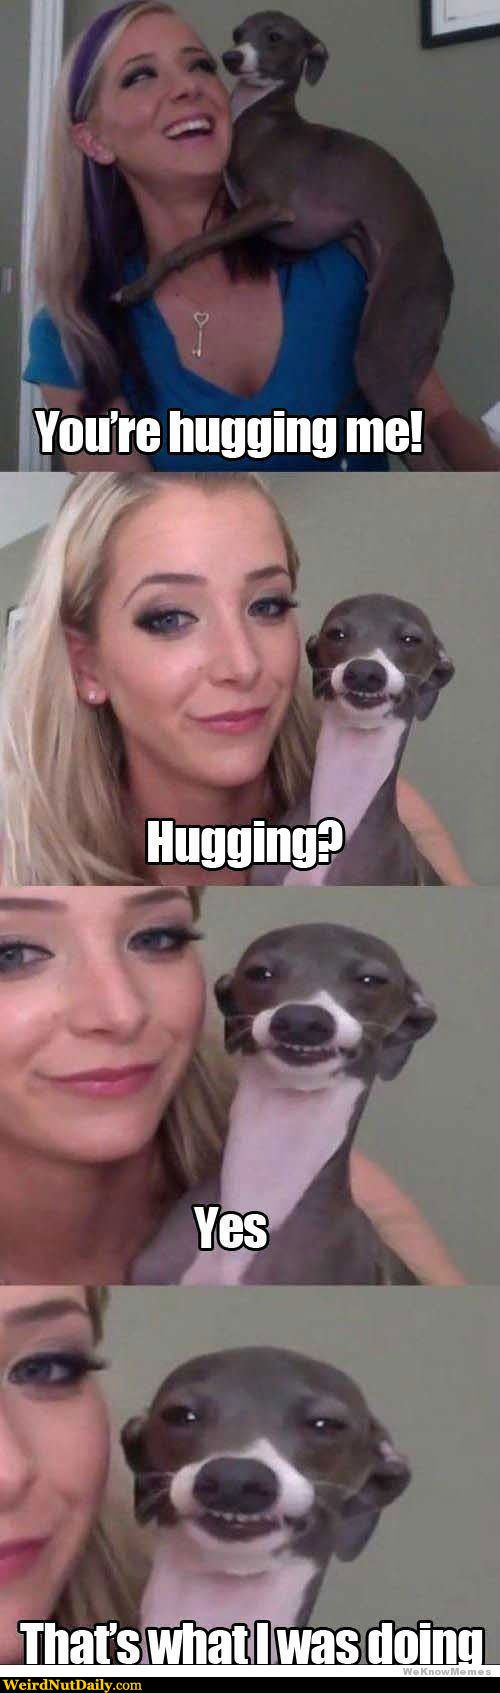 Yeah "hugging"